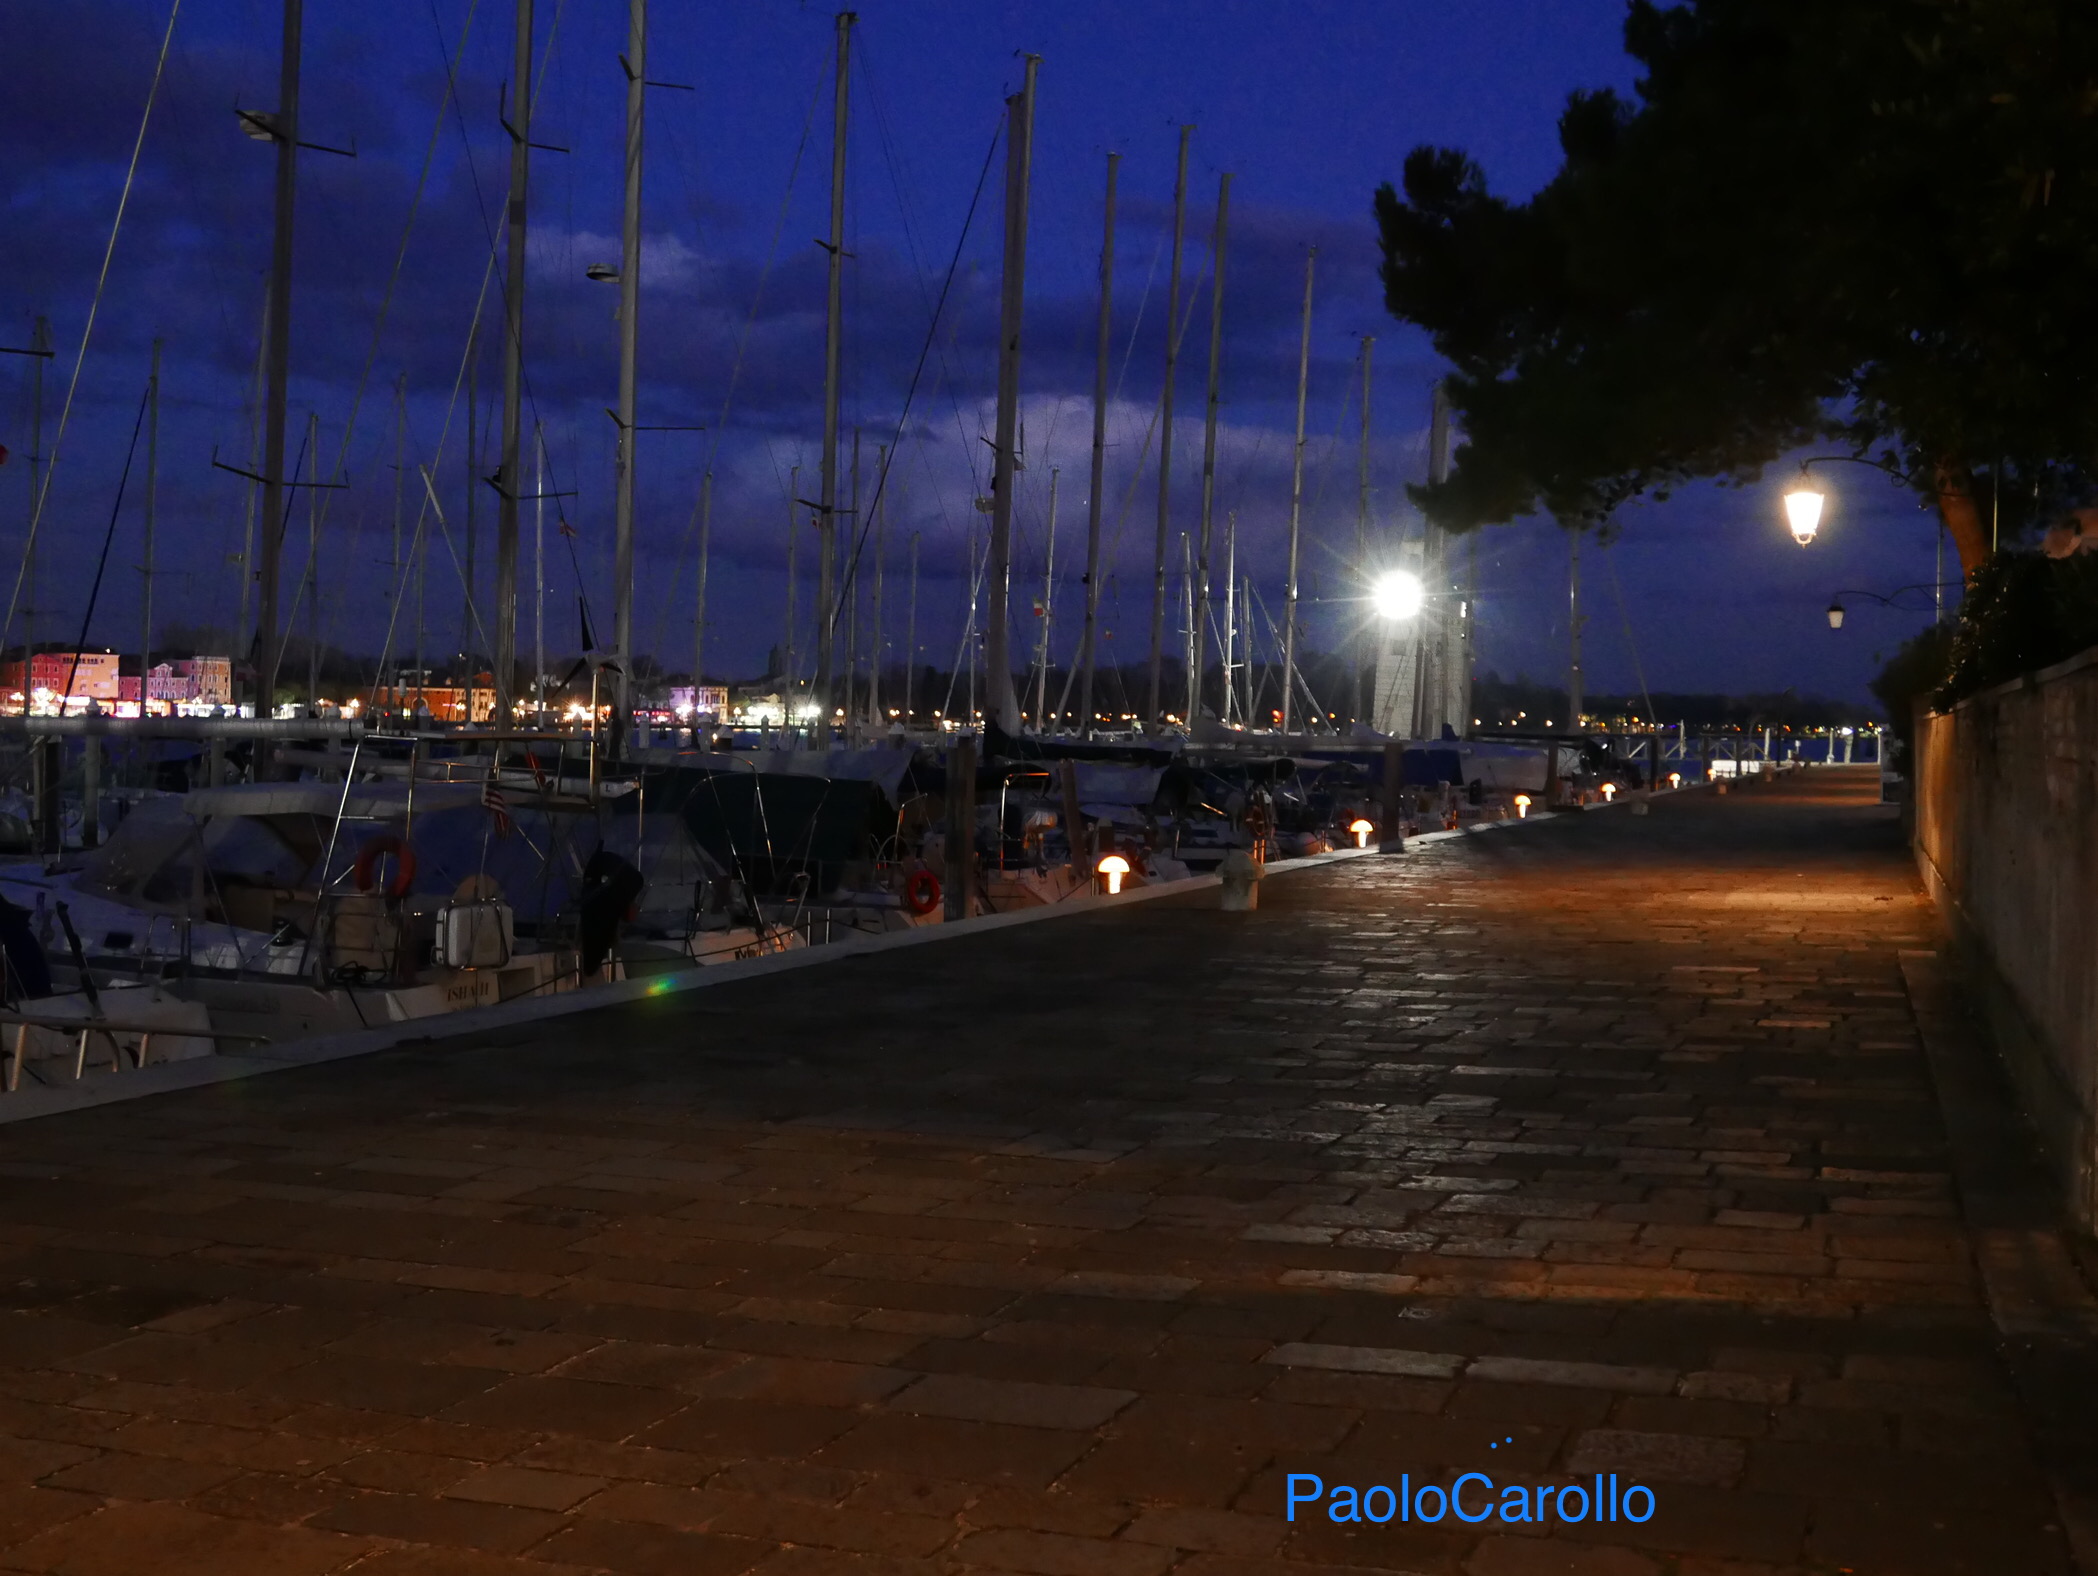 One evening at the island of San Giorgio...